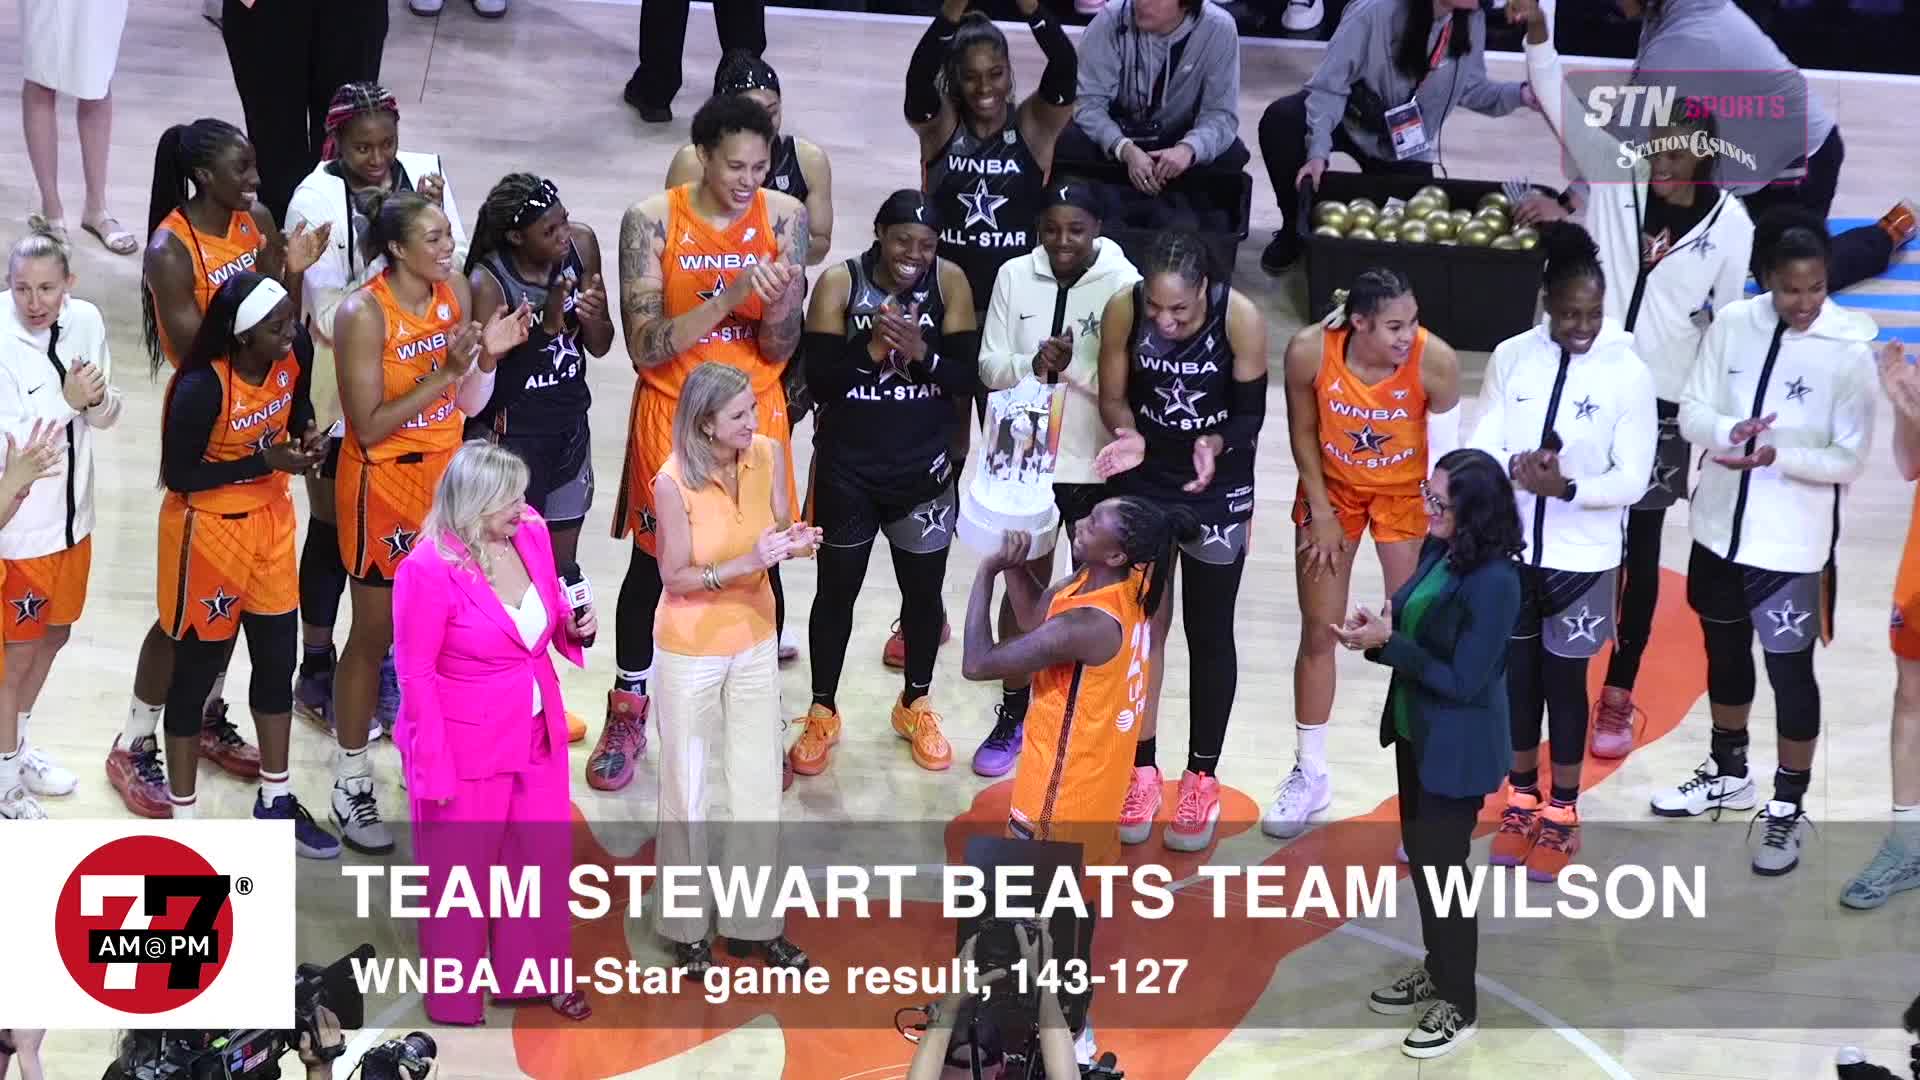 Team Stewart beats Wilson at WNBA All-Star game